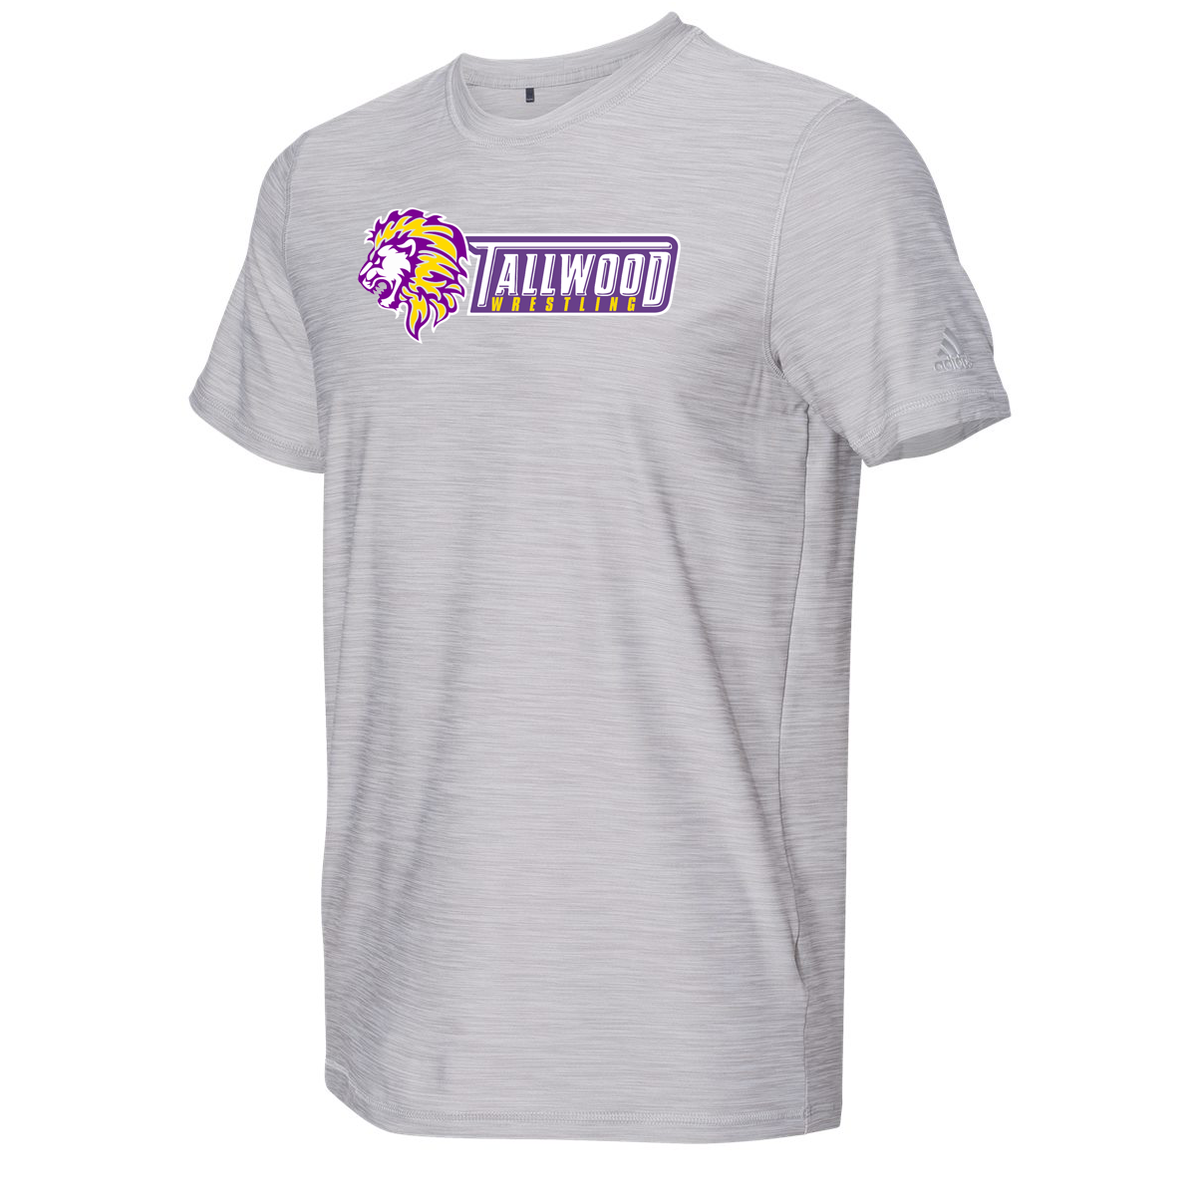 Tallwood Wrestling Adidas Melange Tech T-Shirt